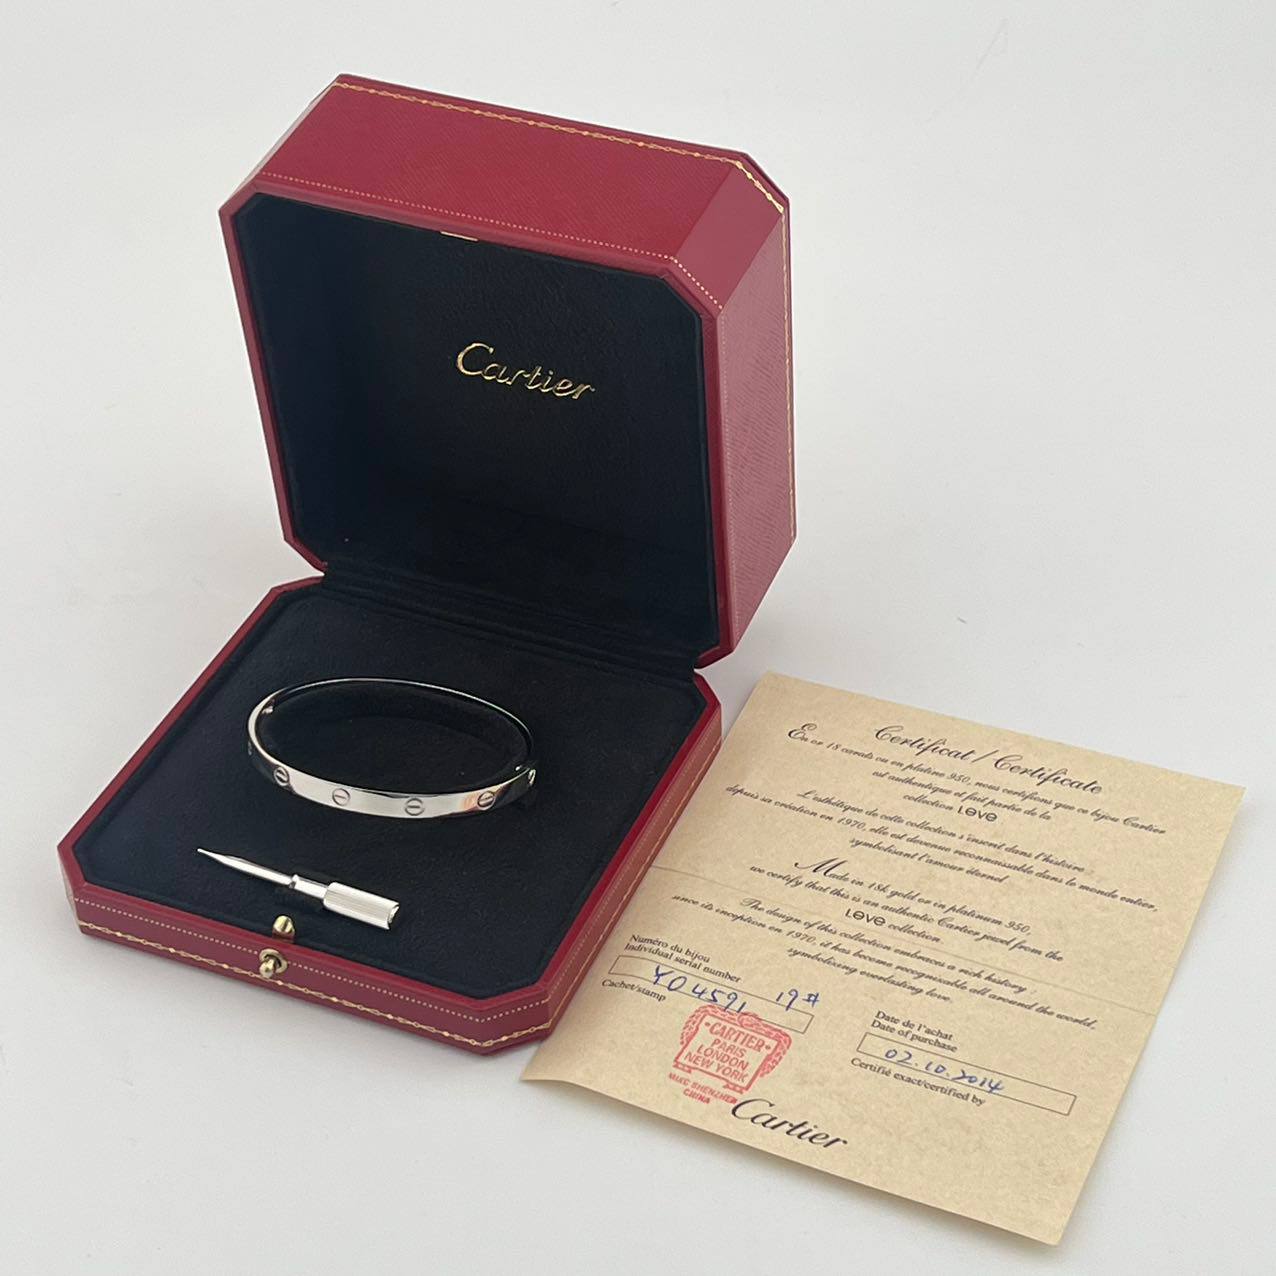 Authentic Vintage 1970 LOVE BRACELET Aldo Cipullo for Charles | Etsy | Love  bracelets, Vintage jewelry, Cartier love bracelet